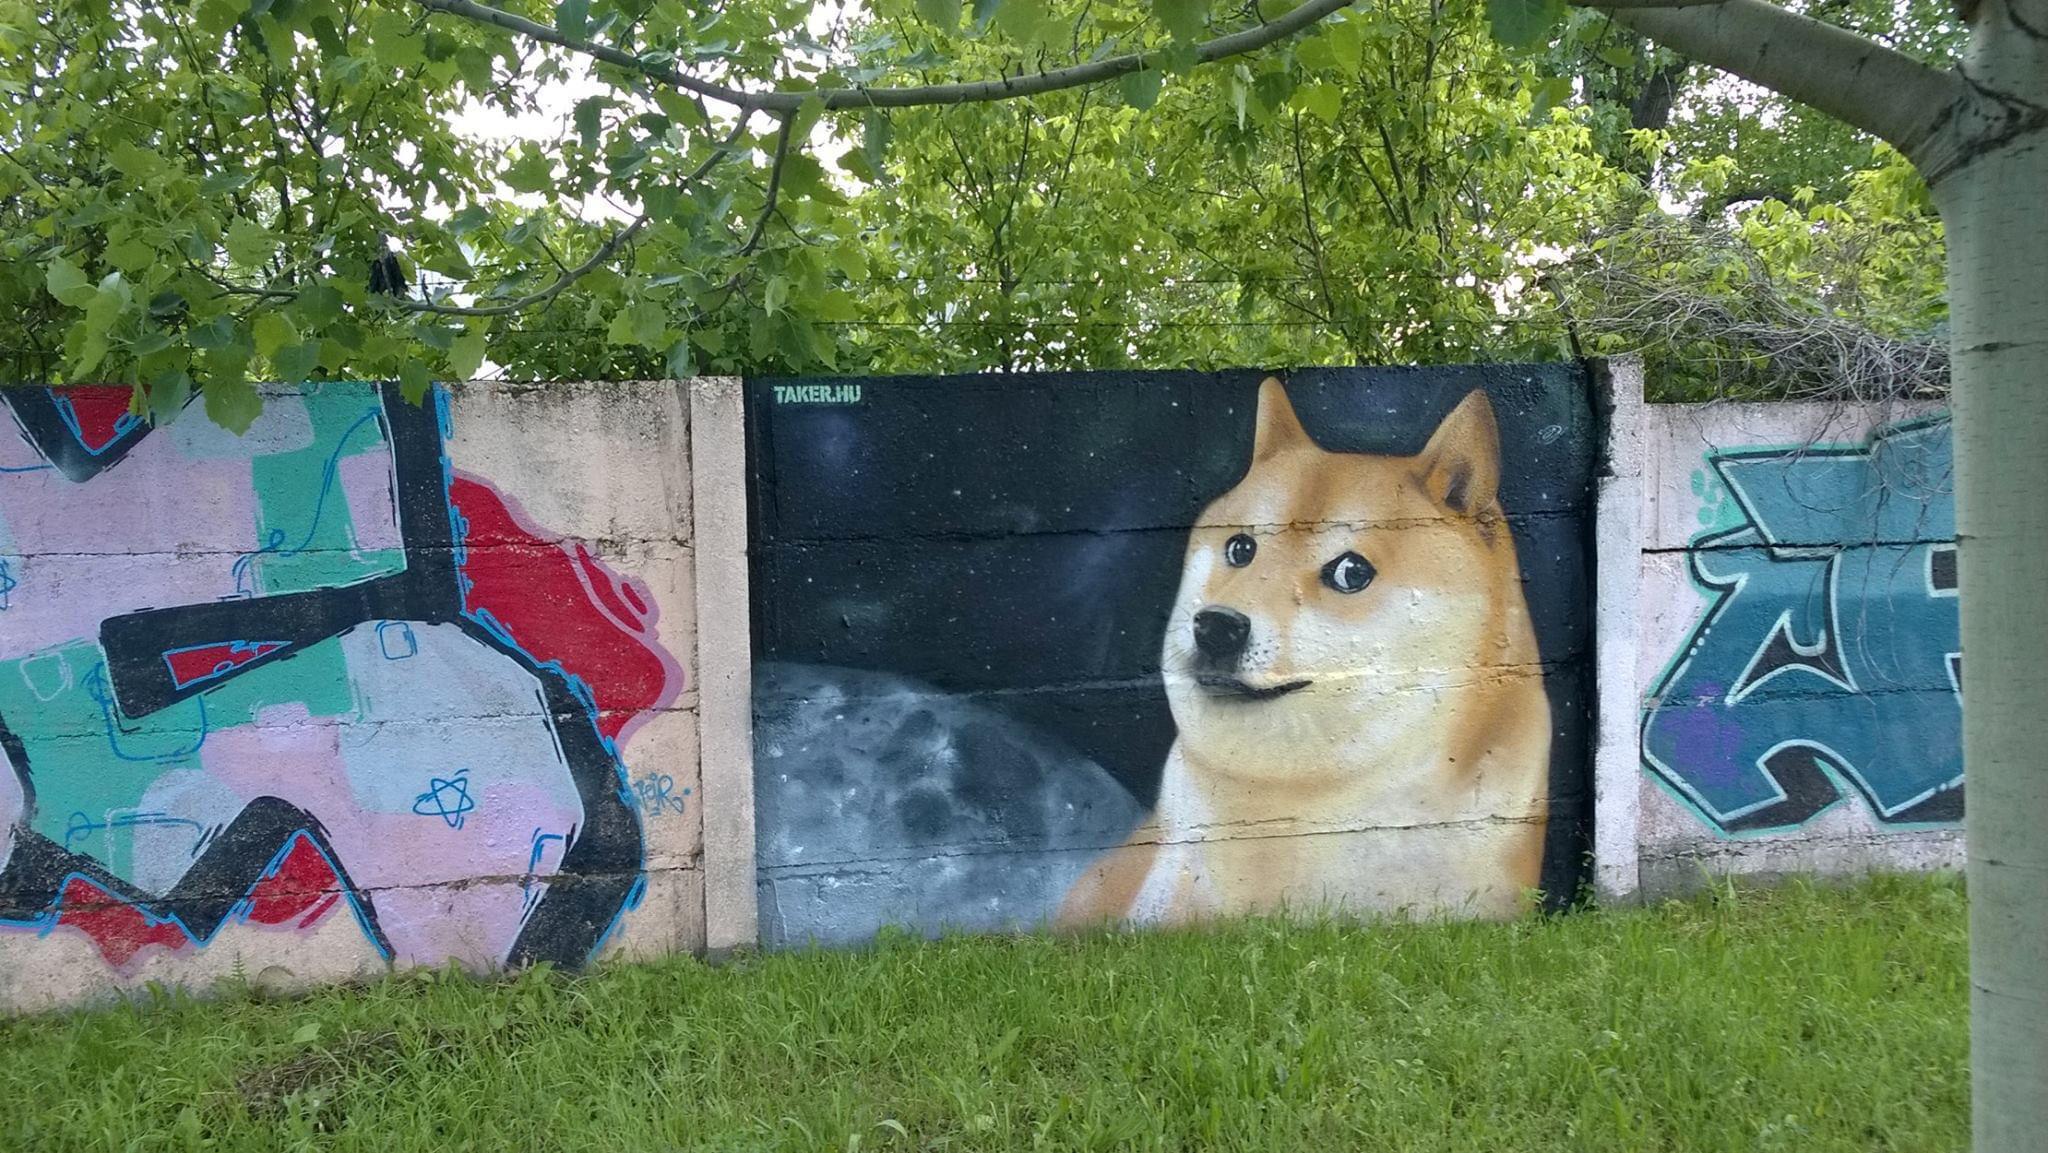 doge graffiti - Airl